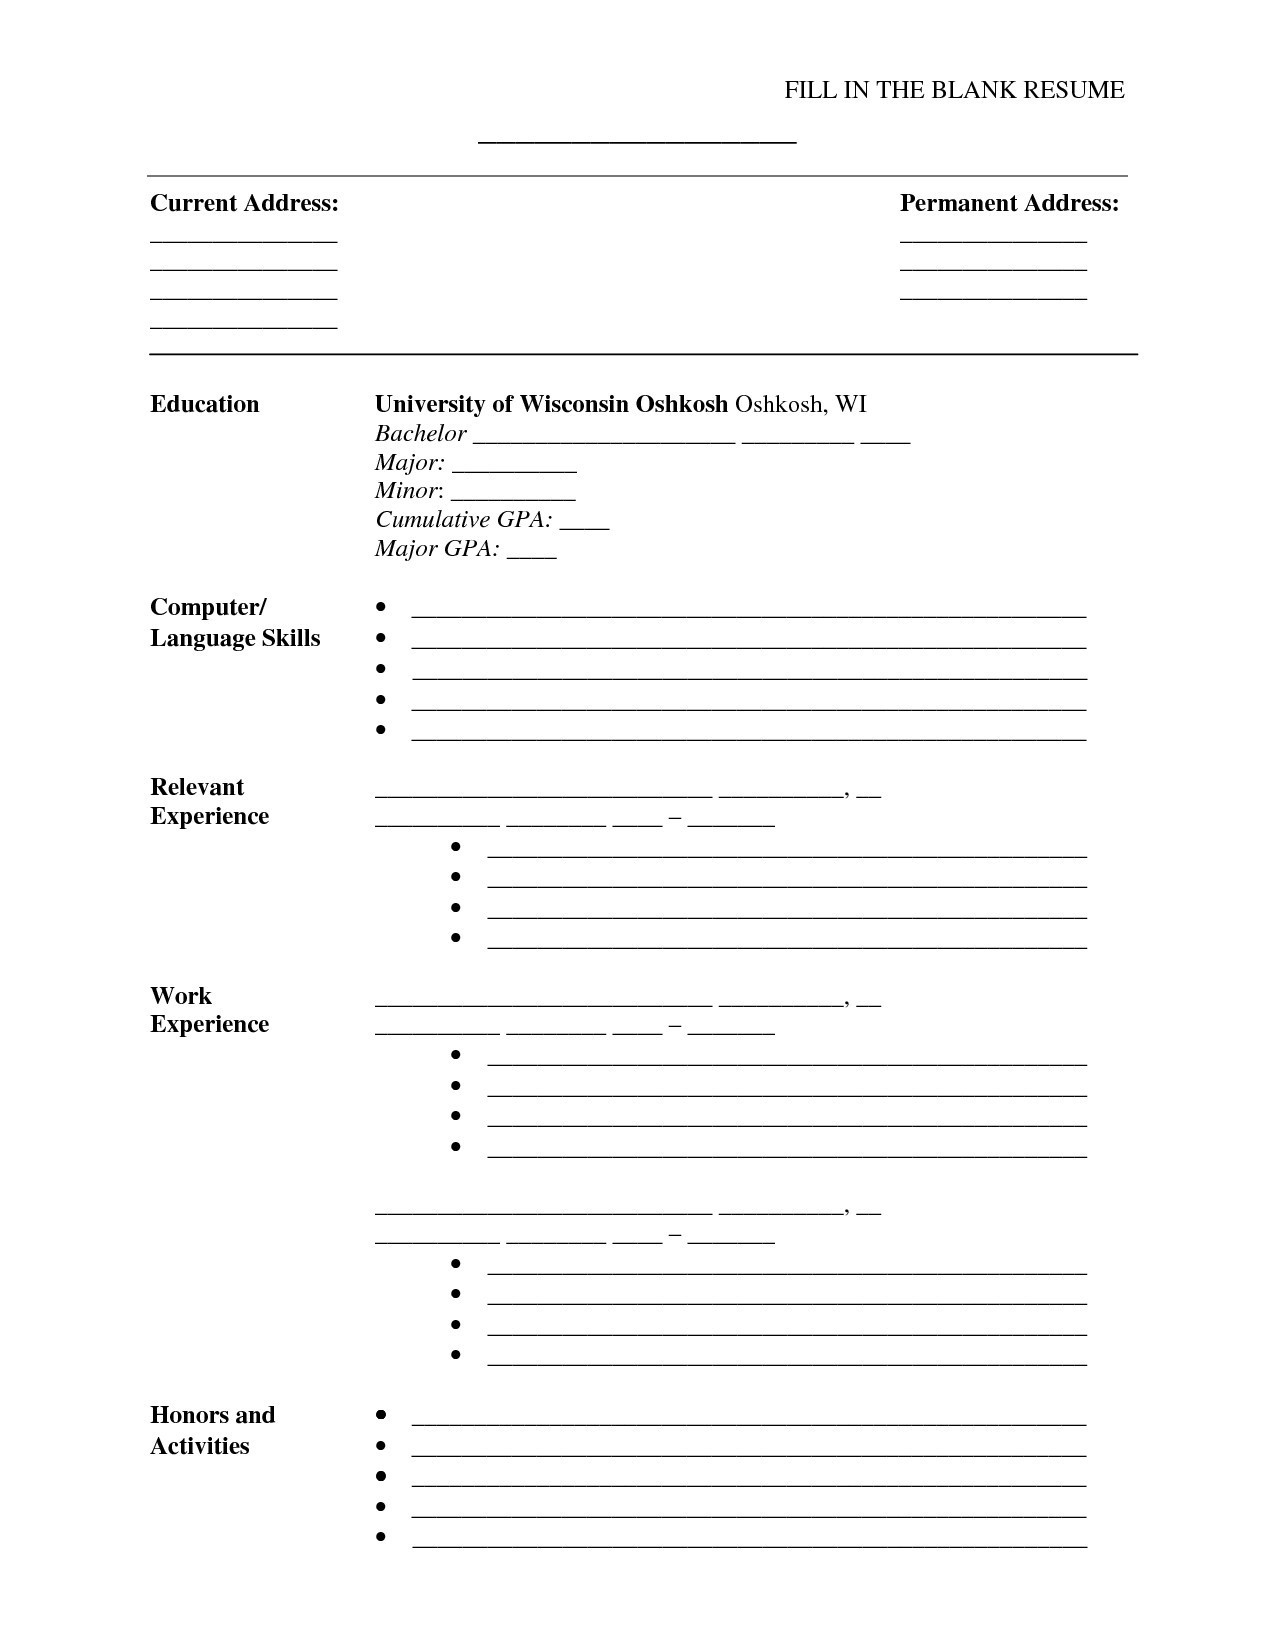 Resume Templates Blank Free Printable New Free Printable Resume - Free Printable Fill In The Blank Resume Templates